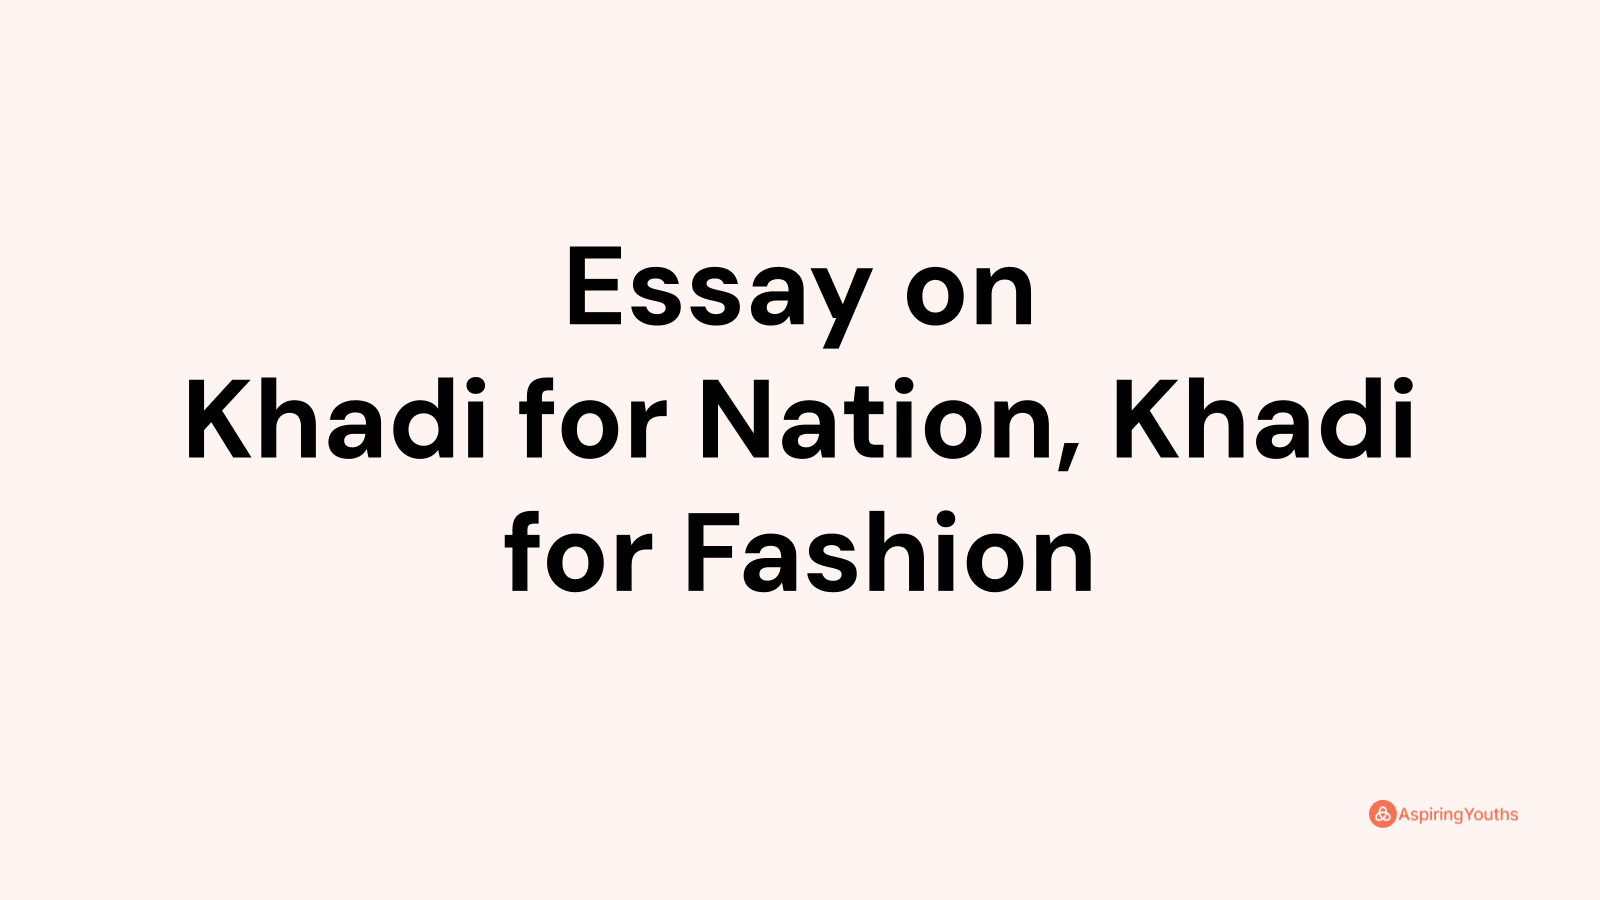 Essay on Khadi for Nation, Khadi for Fashion